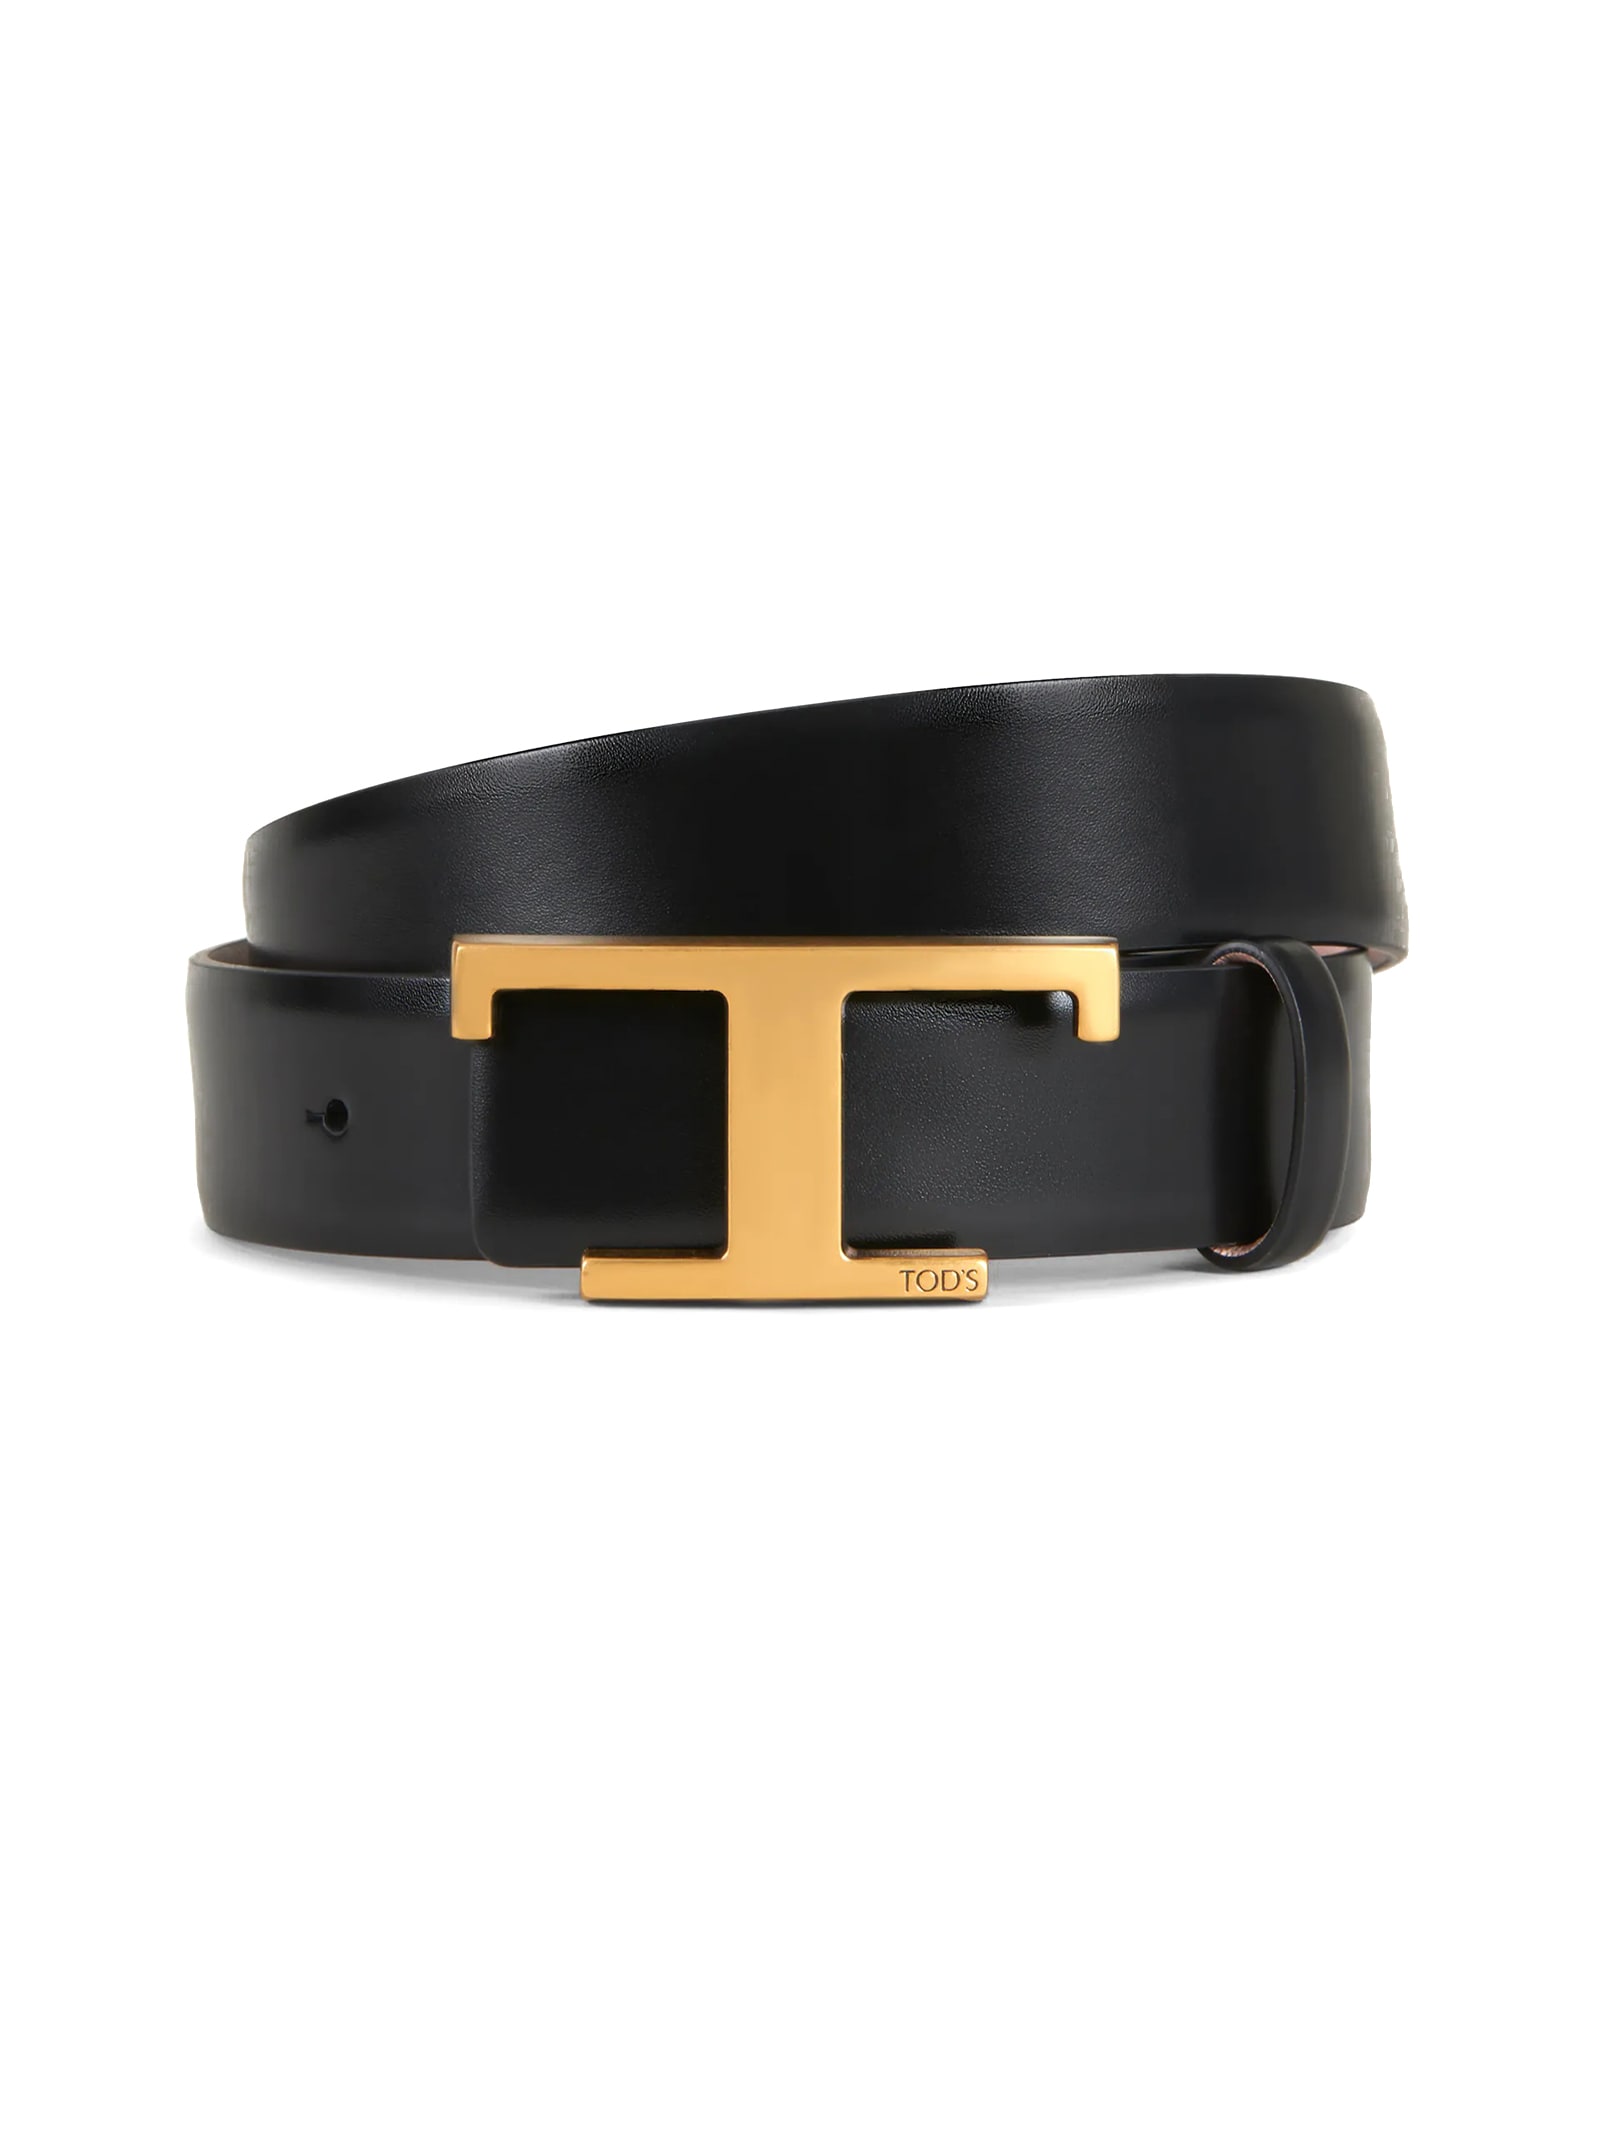 Tods Black Smooth Leather Belt